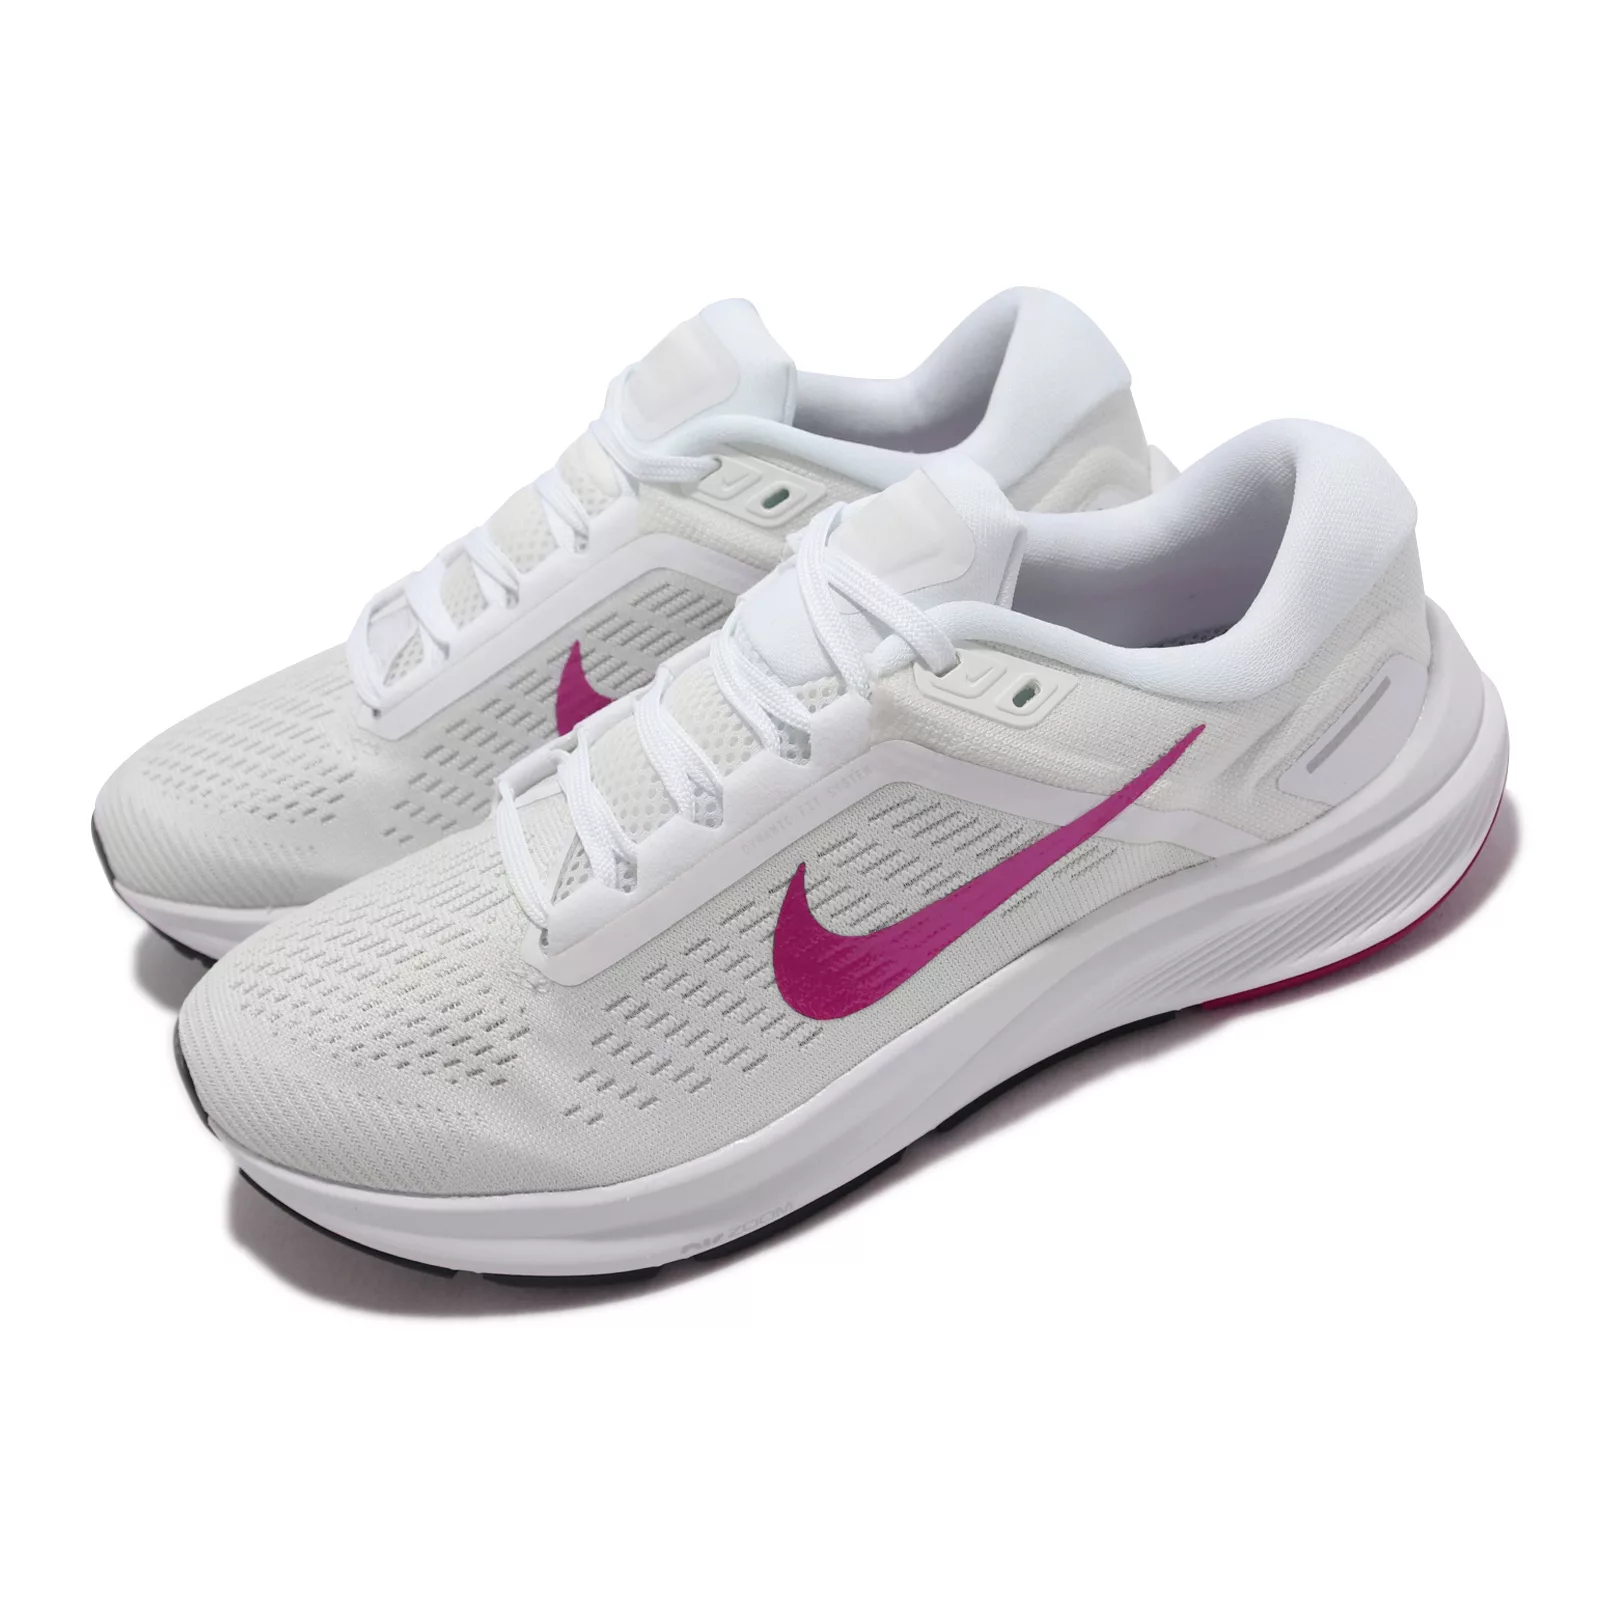 Nike 慢跑鞋 Air Zoom Structure 24 女鞋 男鞋 白 桃紅 路跑 運動鞋 DA8570-103 23.5cm WHITE/PINK PRIME